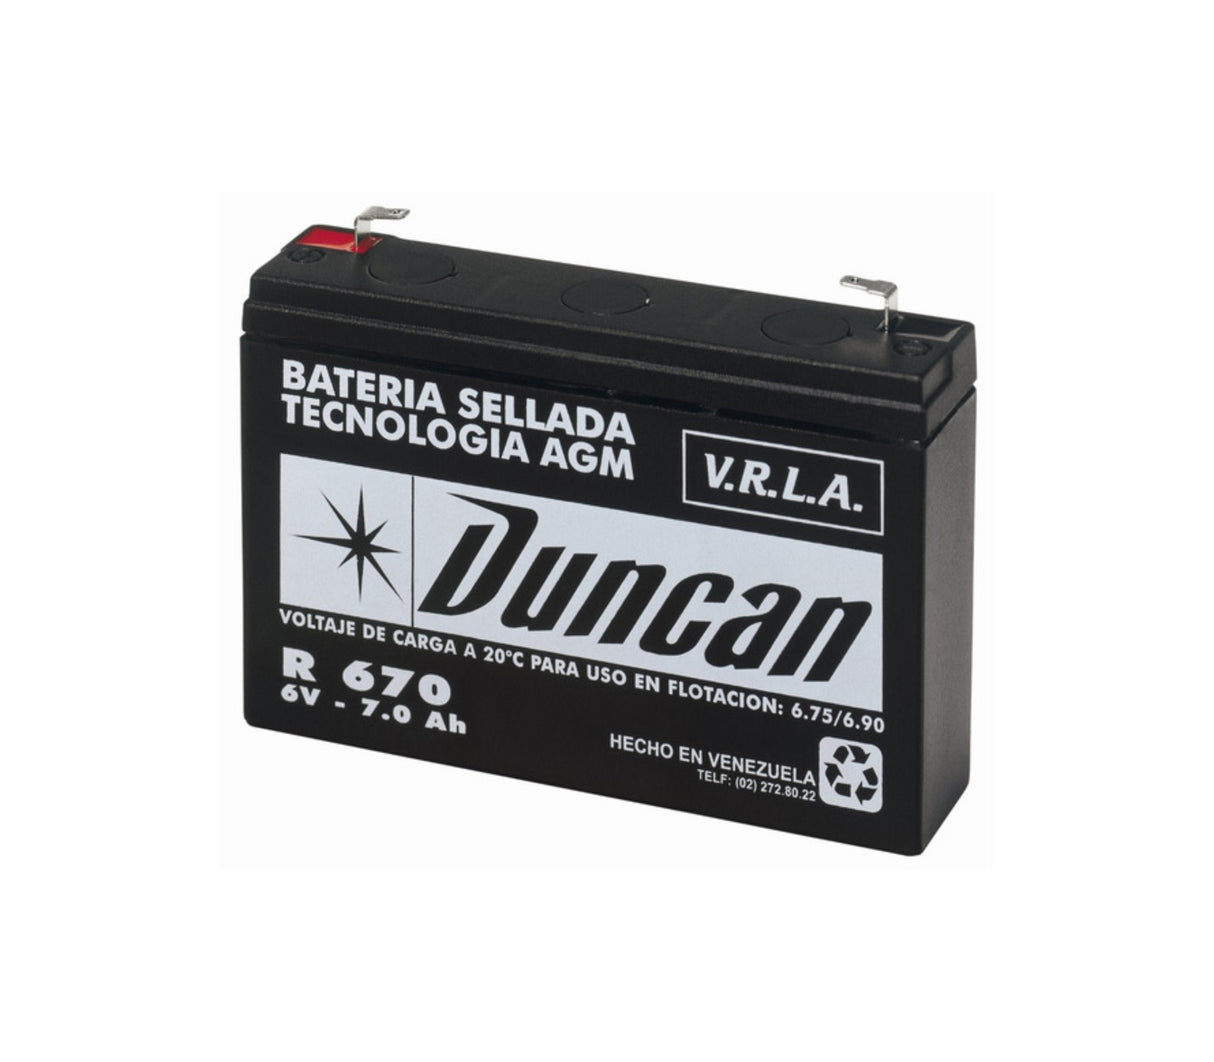 Batería AGM gel R-670 Duncan –